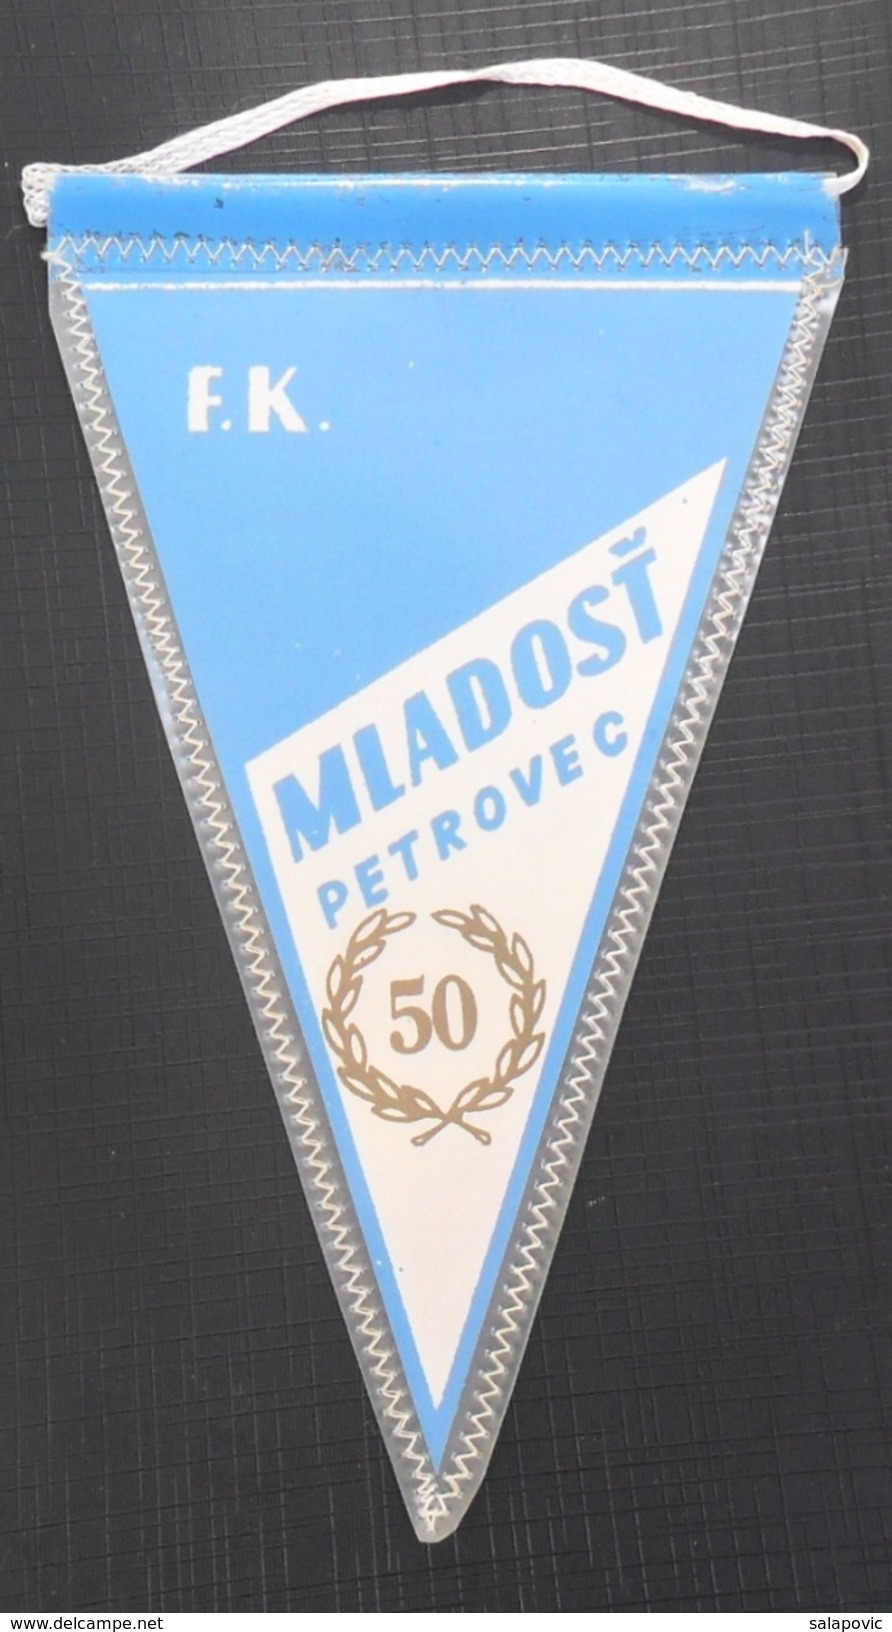 FK Mladost Petrovec, SERBIA FOOTBALL CLUB, CALCIO OLD PENNANT, SPORTS FLAG - Abbigliamento, Souvenirs & Varie